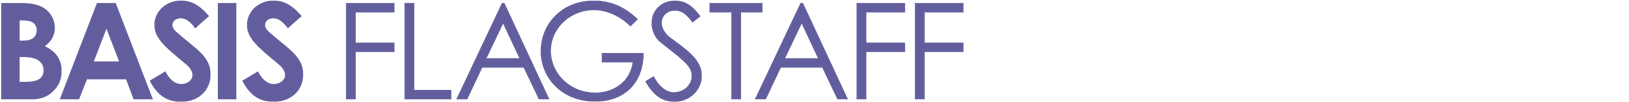 BASIS Flagstaff text logo